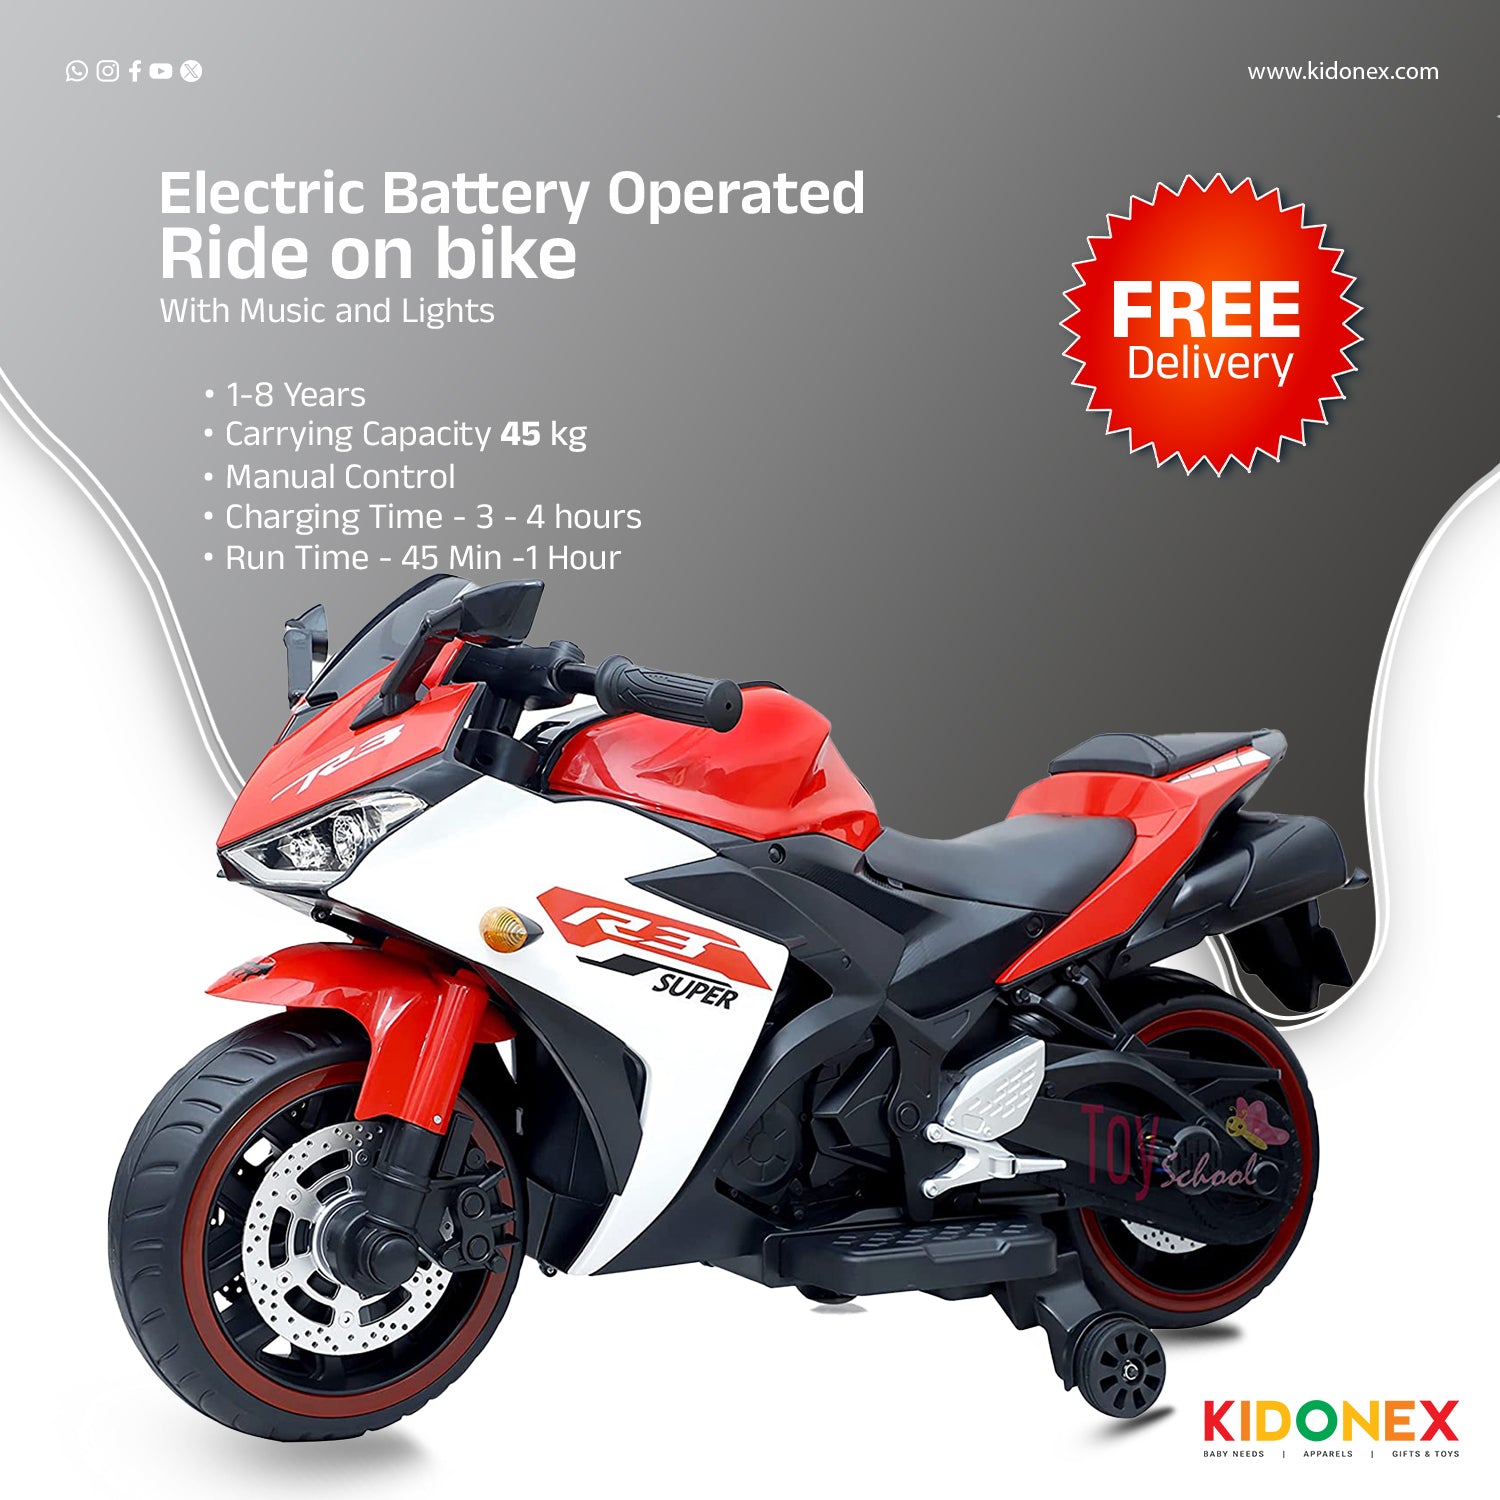 Battery operated rideon Bike